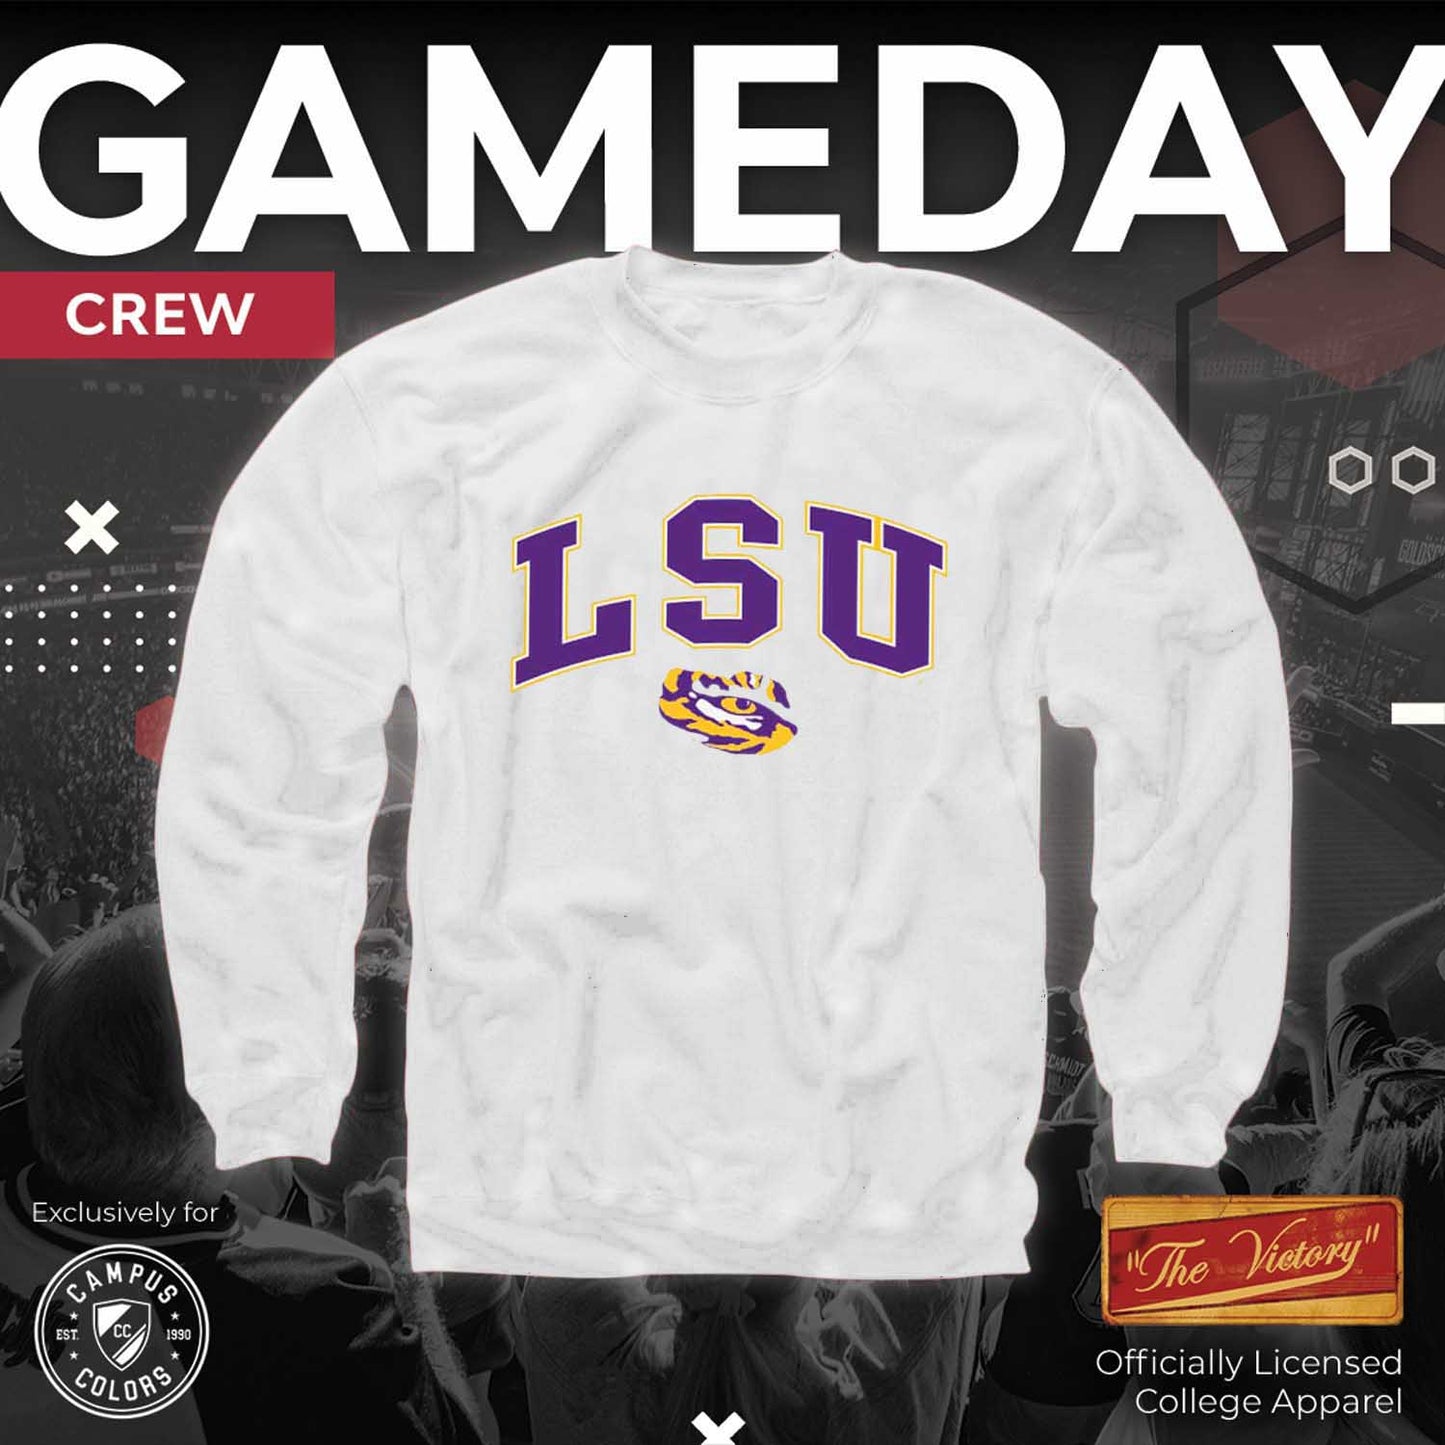 LSU Tigers Adult Arch & Logo Soft Style Gameday Crewneck Sweatshirt - White